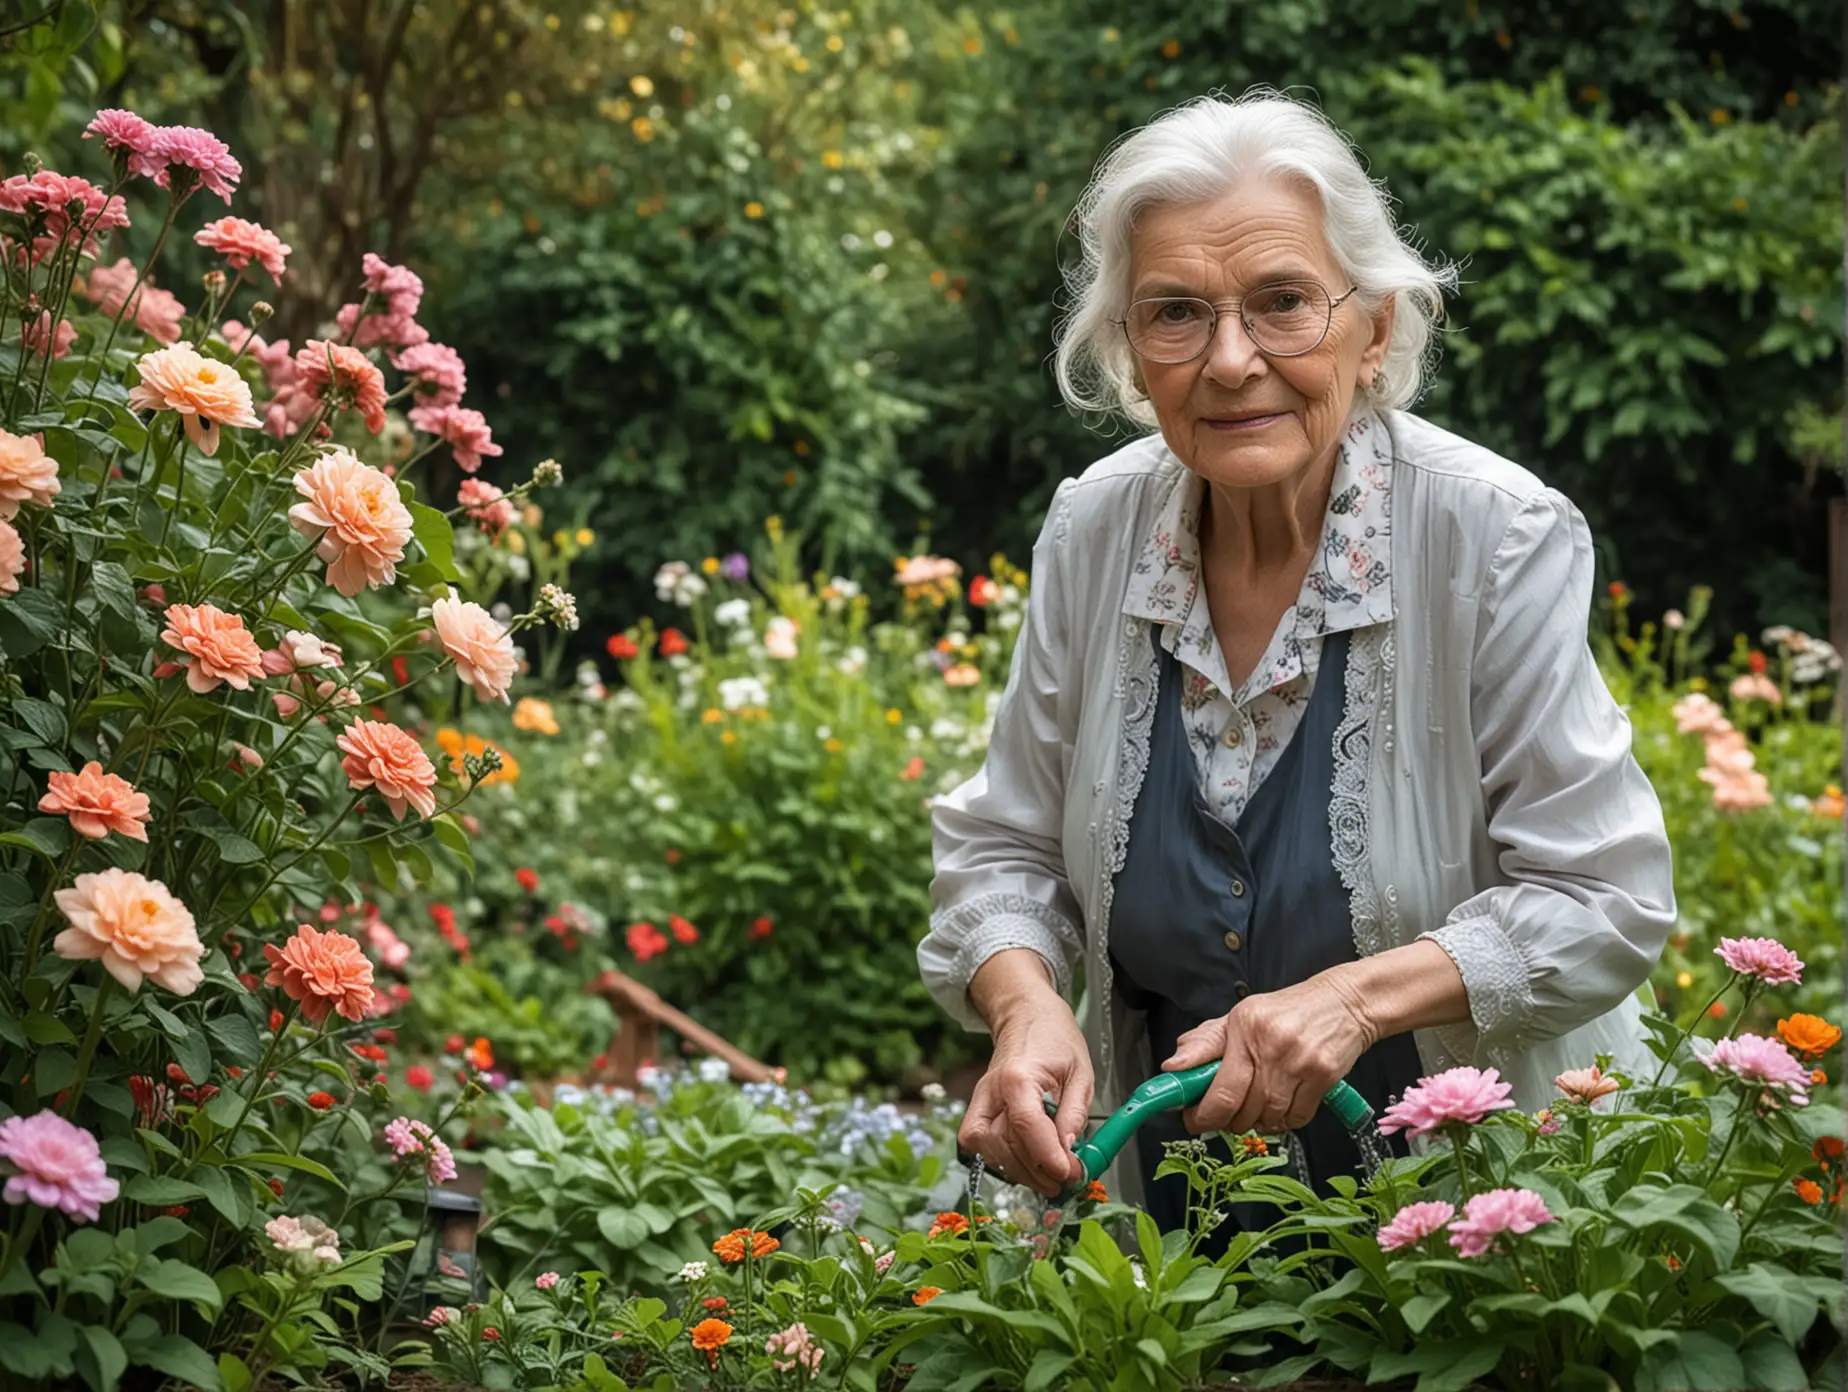 Elegant Senior Woman Tending to Garden Flowers with Graceful Pose